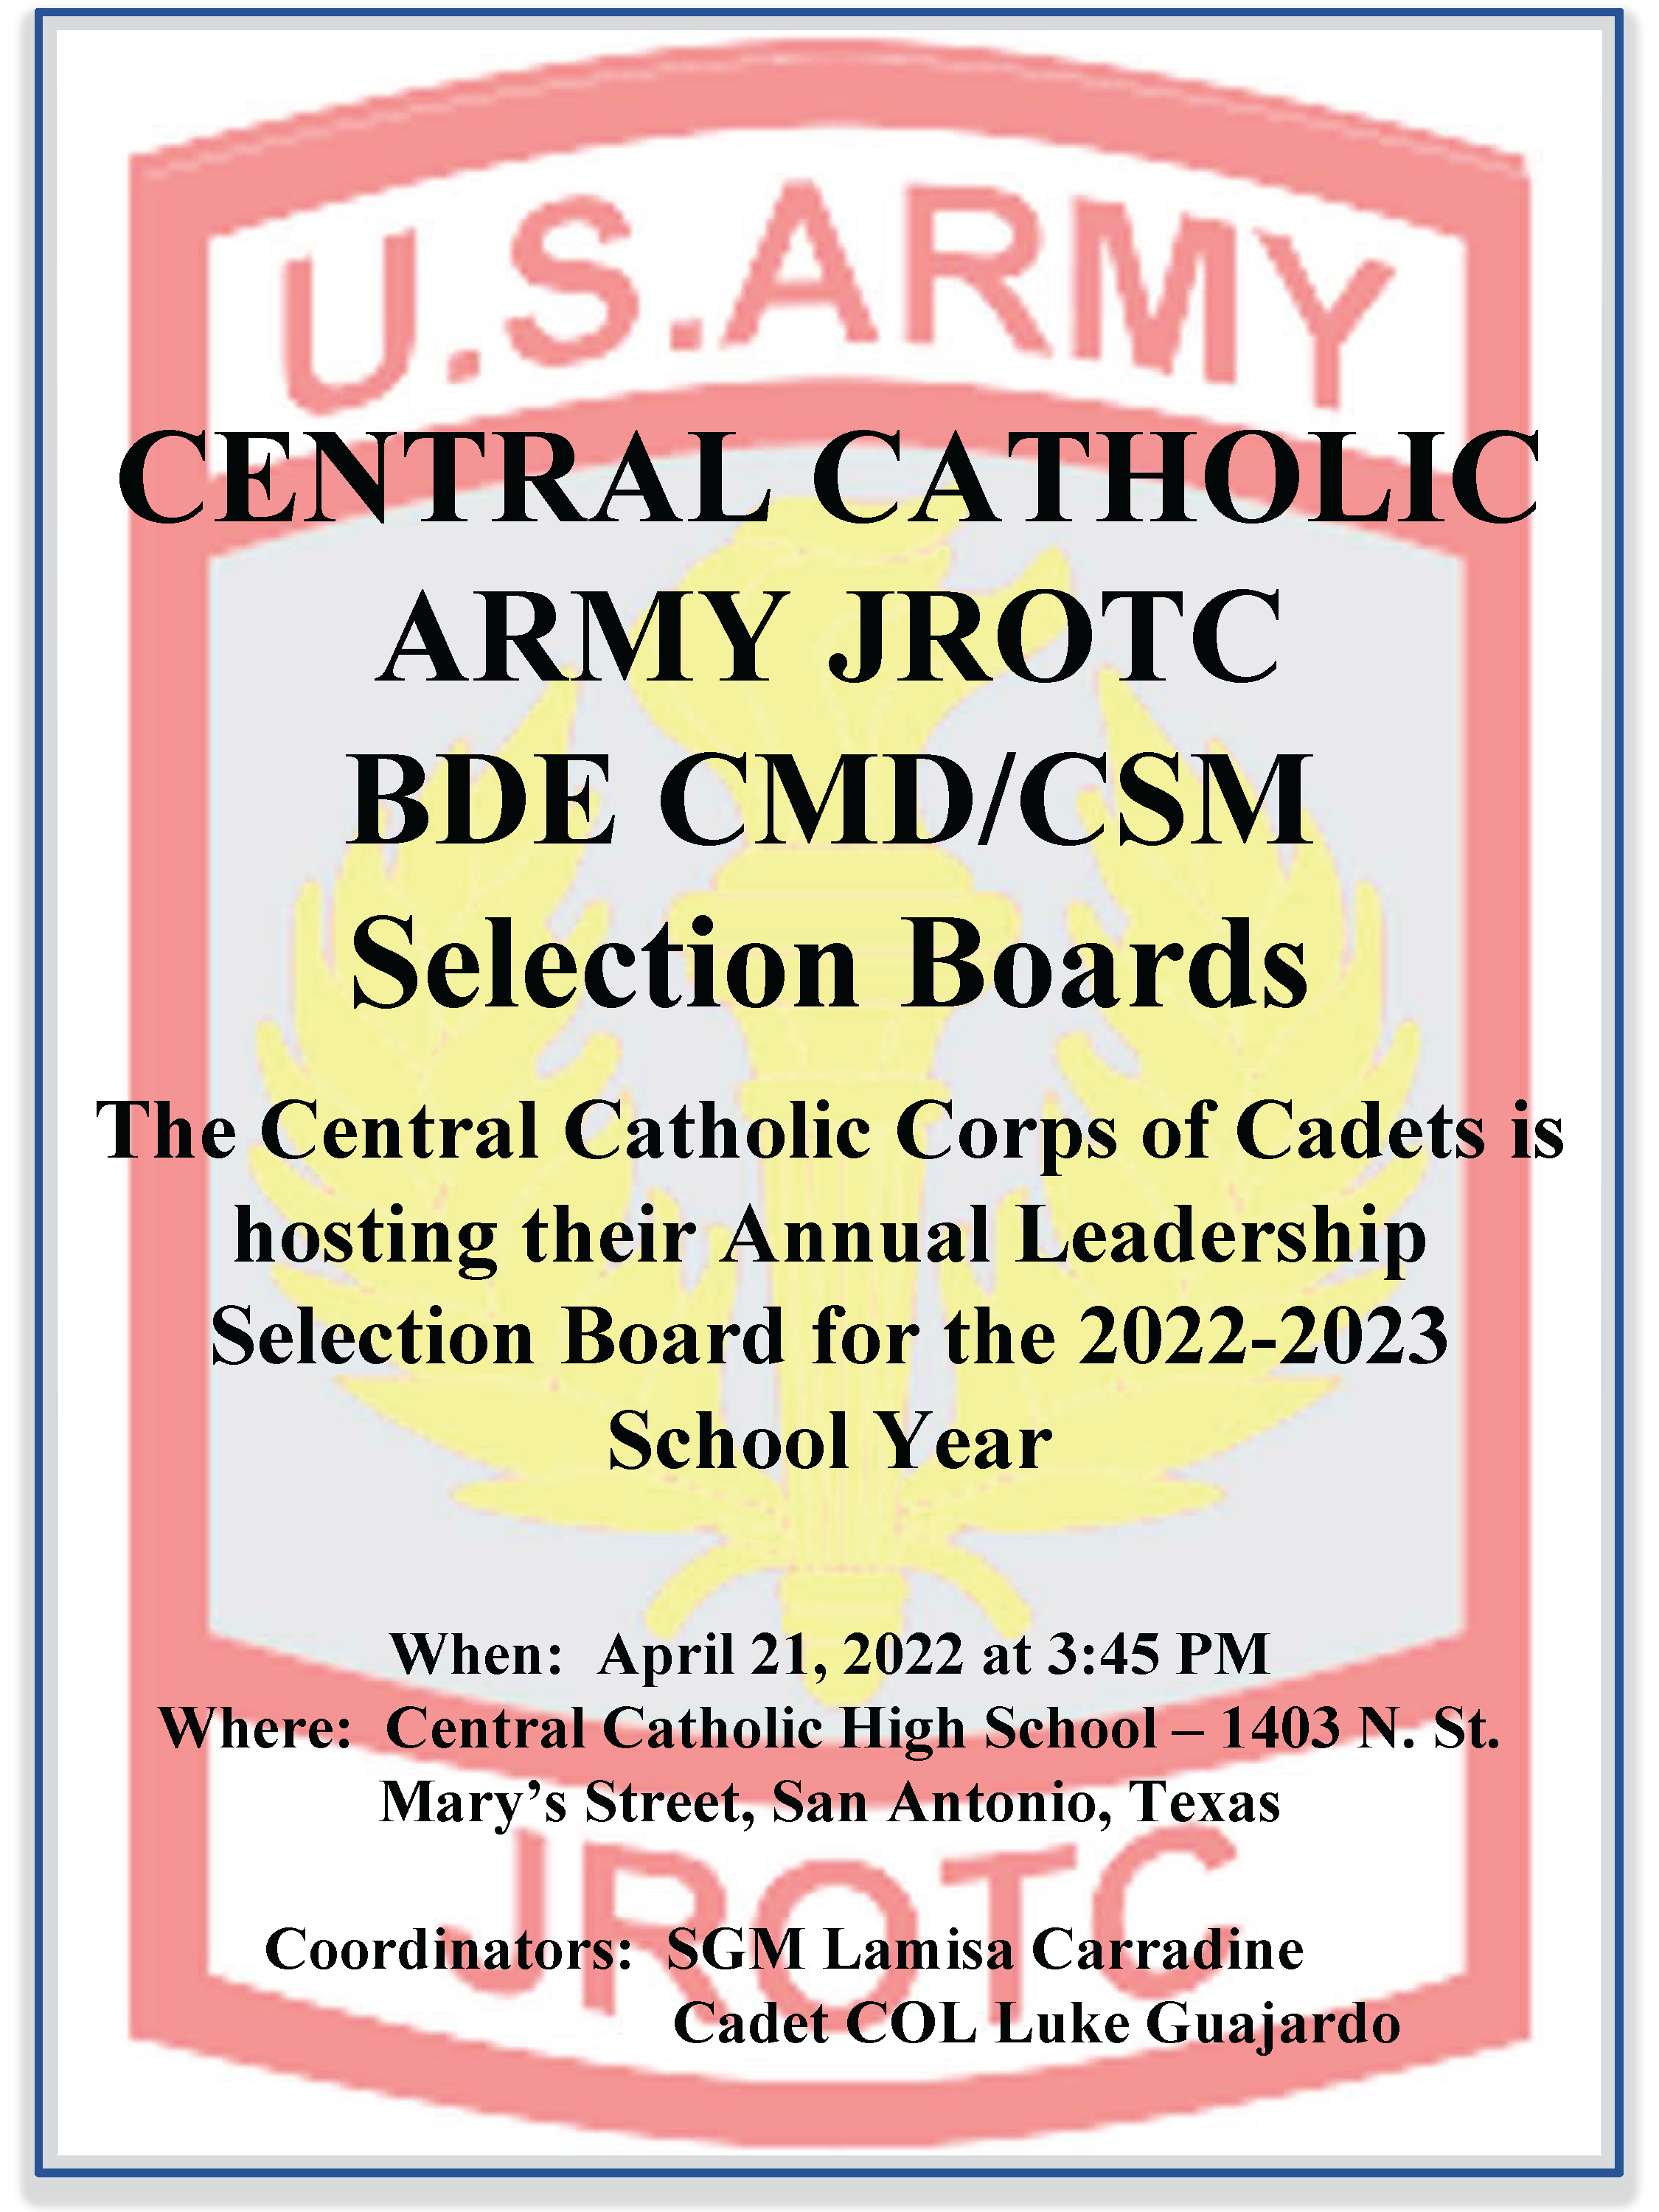 BDE CMD/CSM Selection Boards